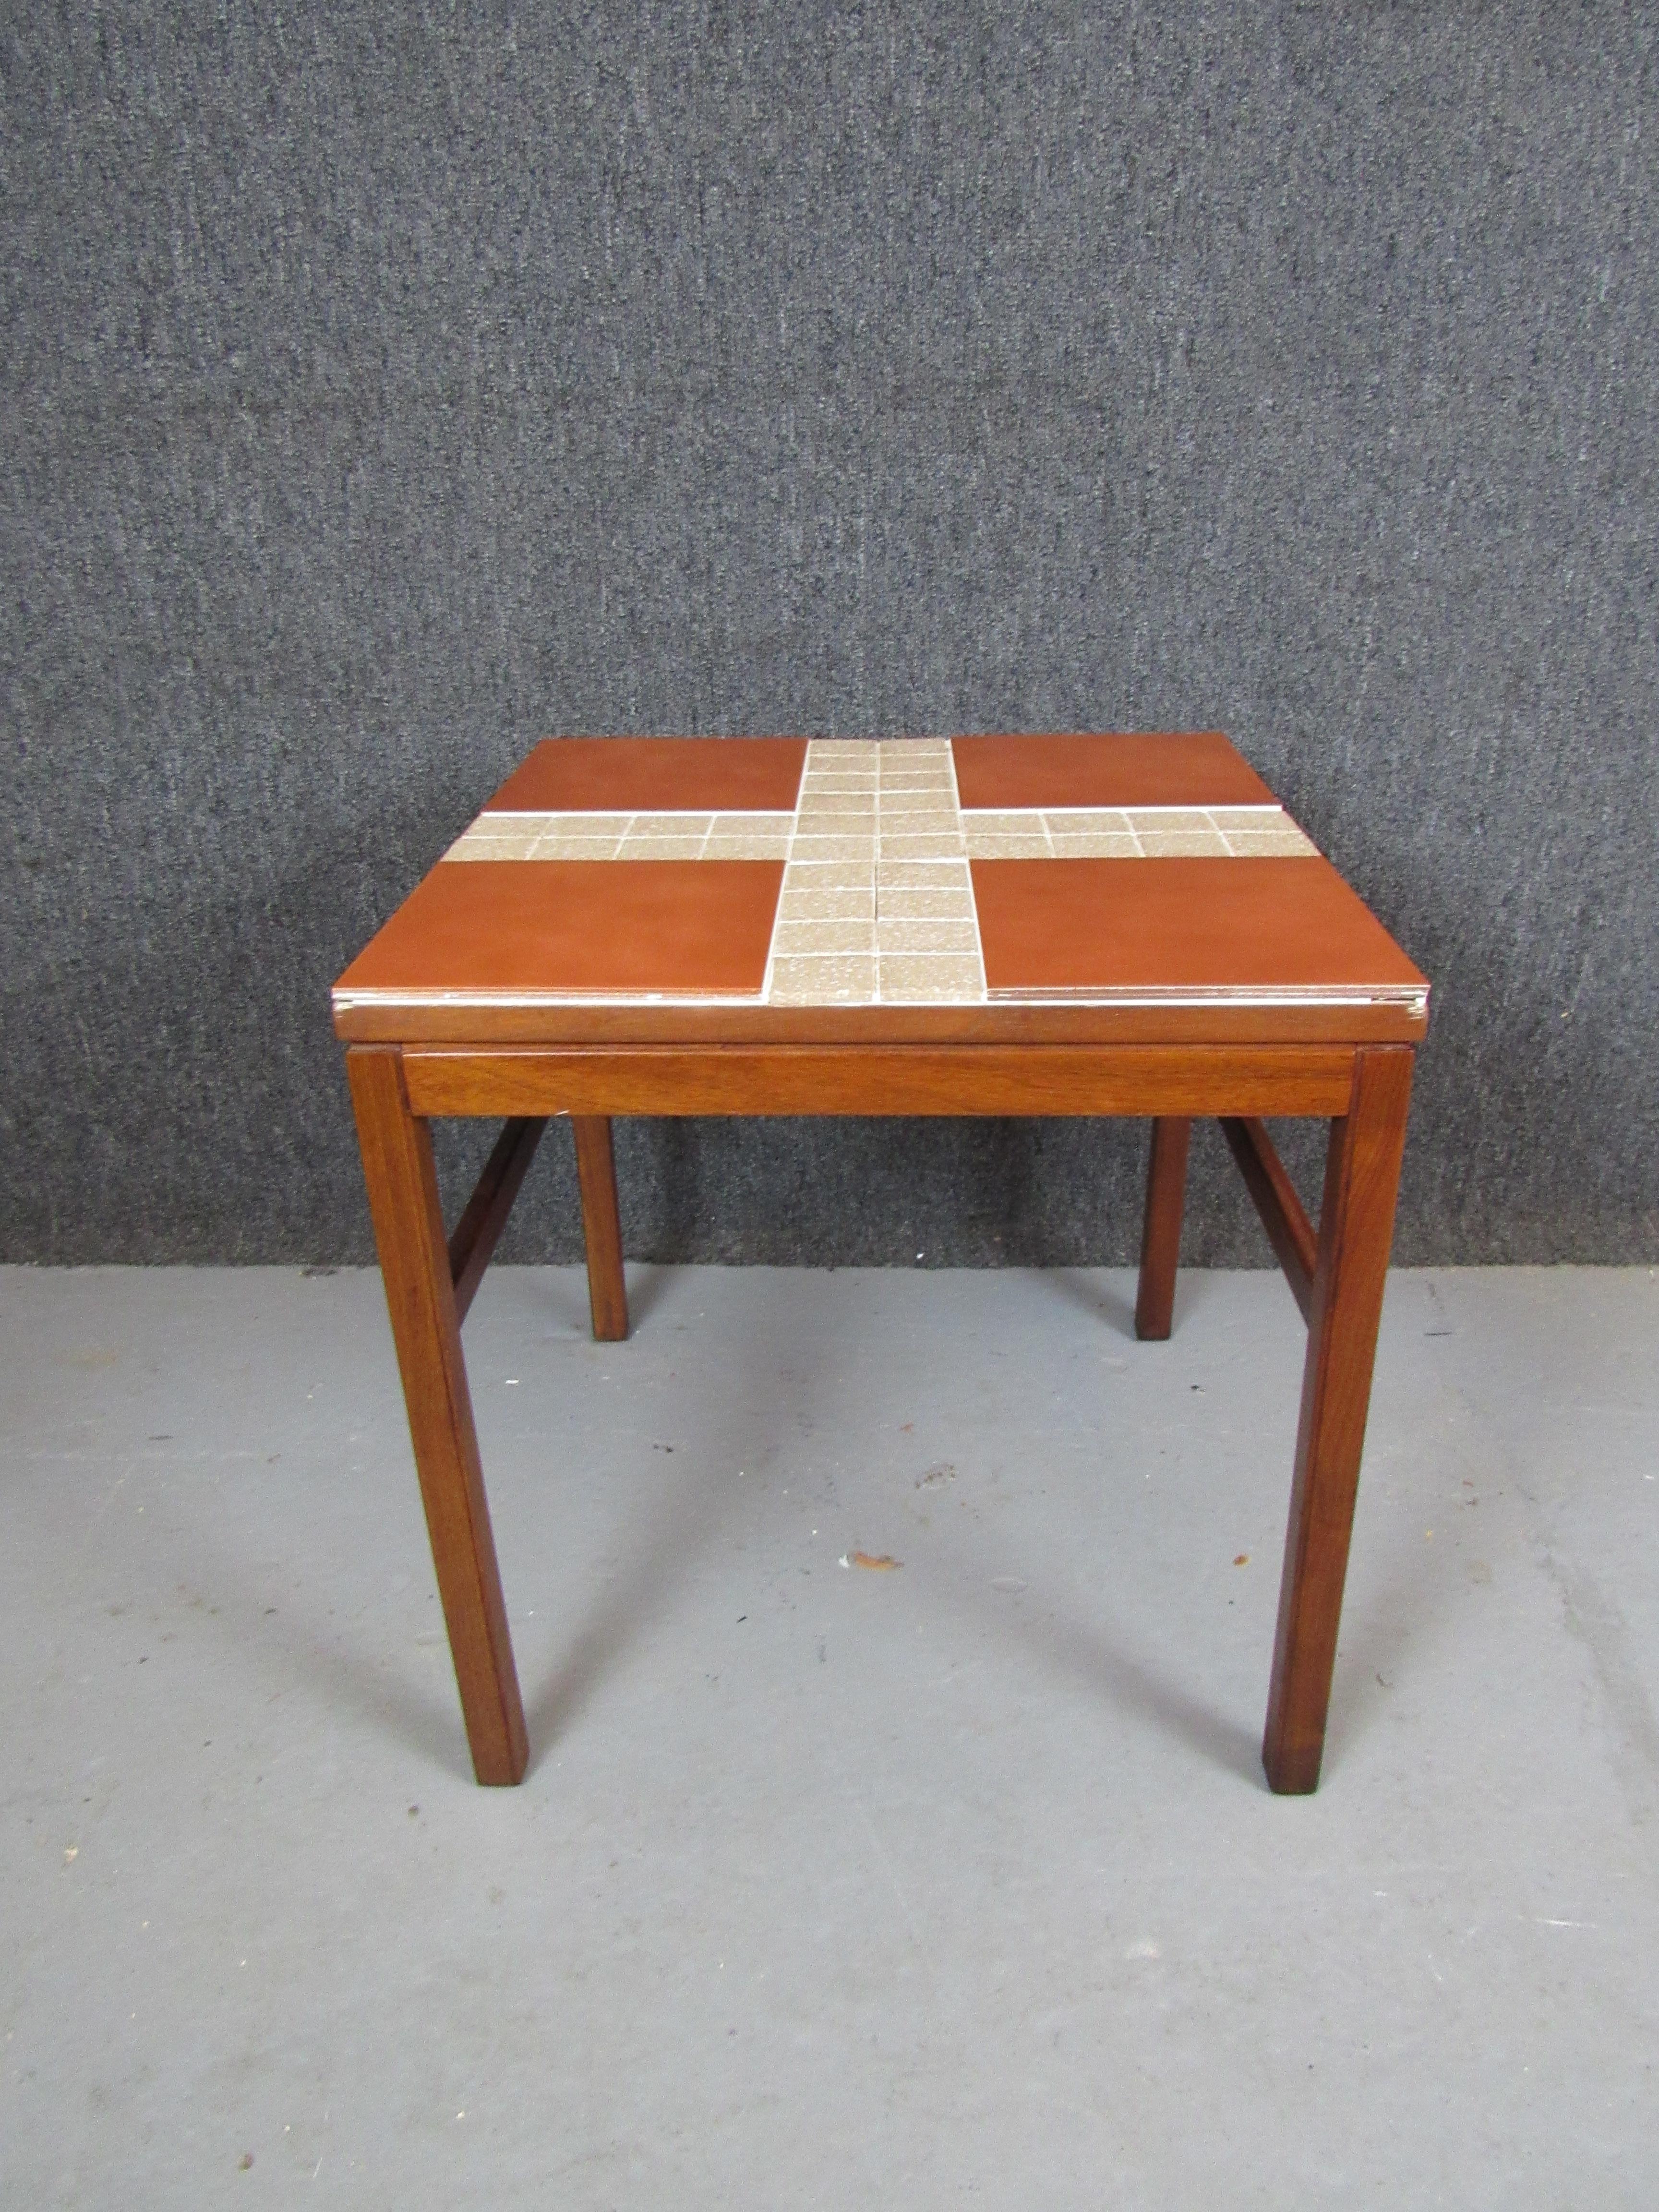 Inlay Vintage Terracota Tile & Teak Table by Arbatove For Sale